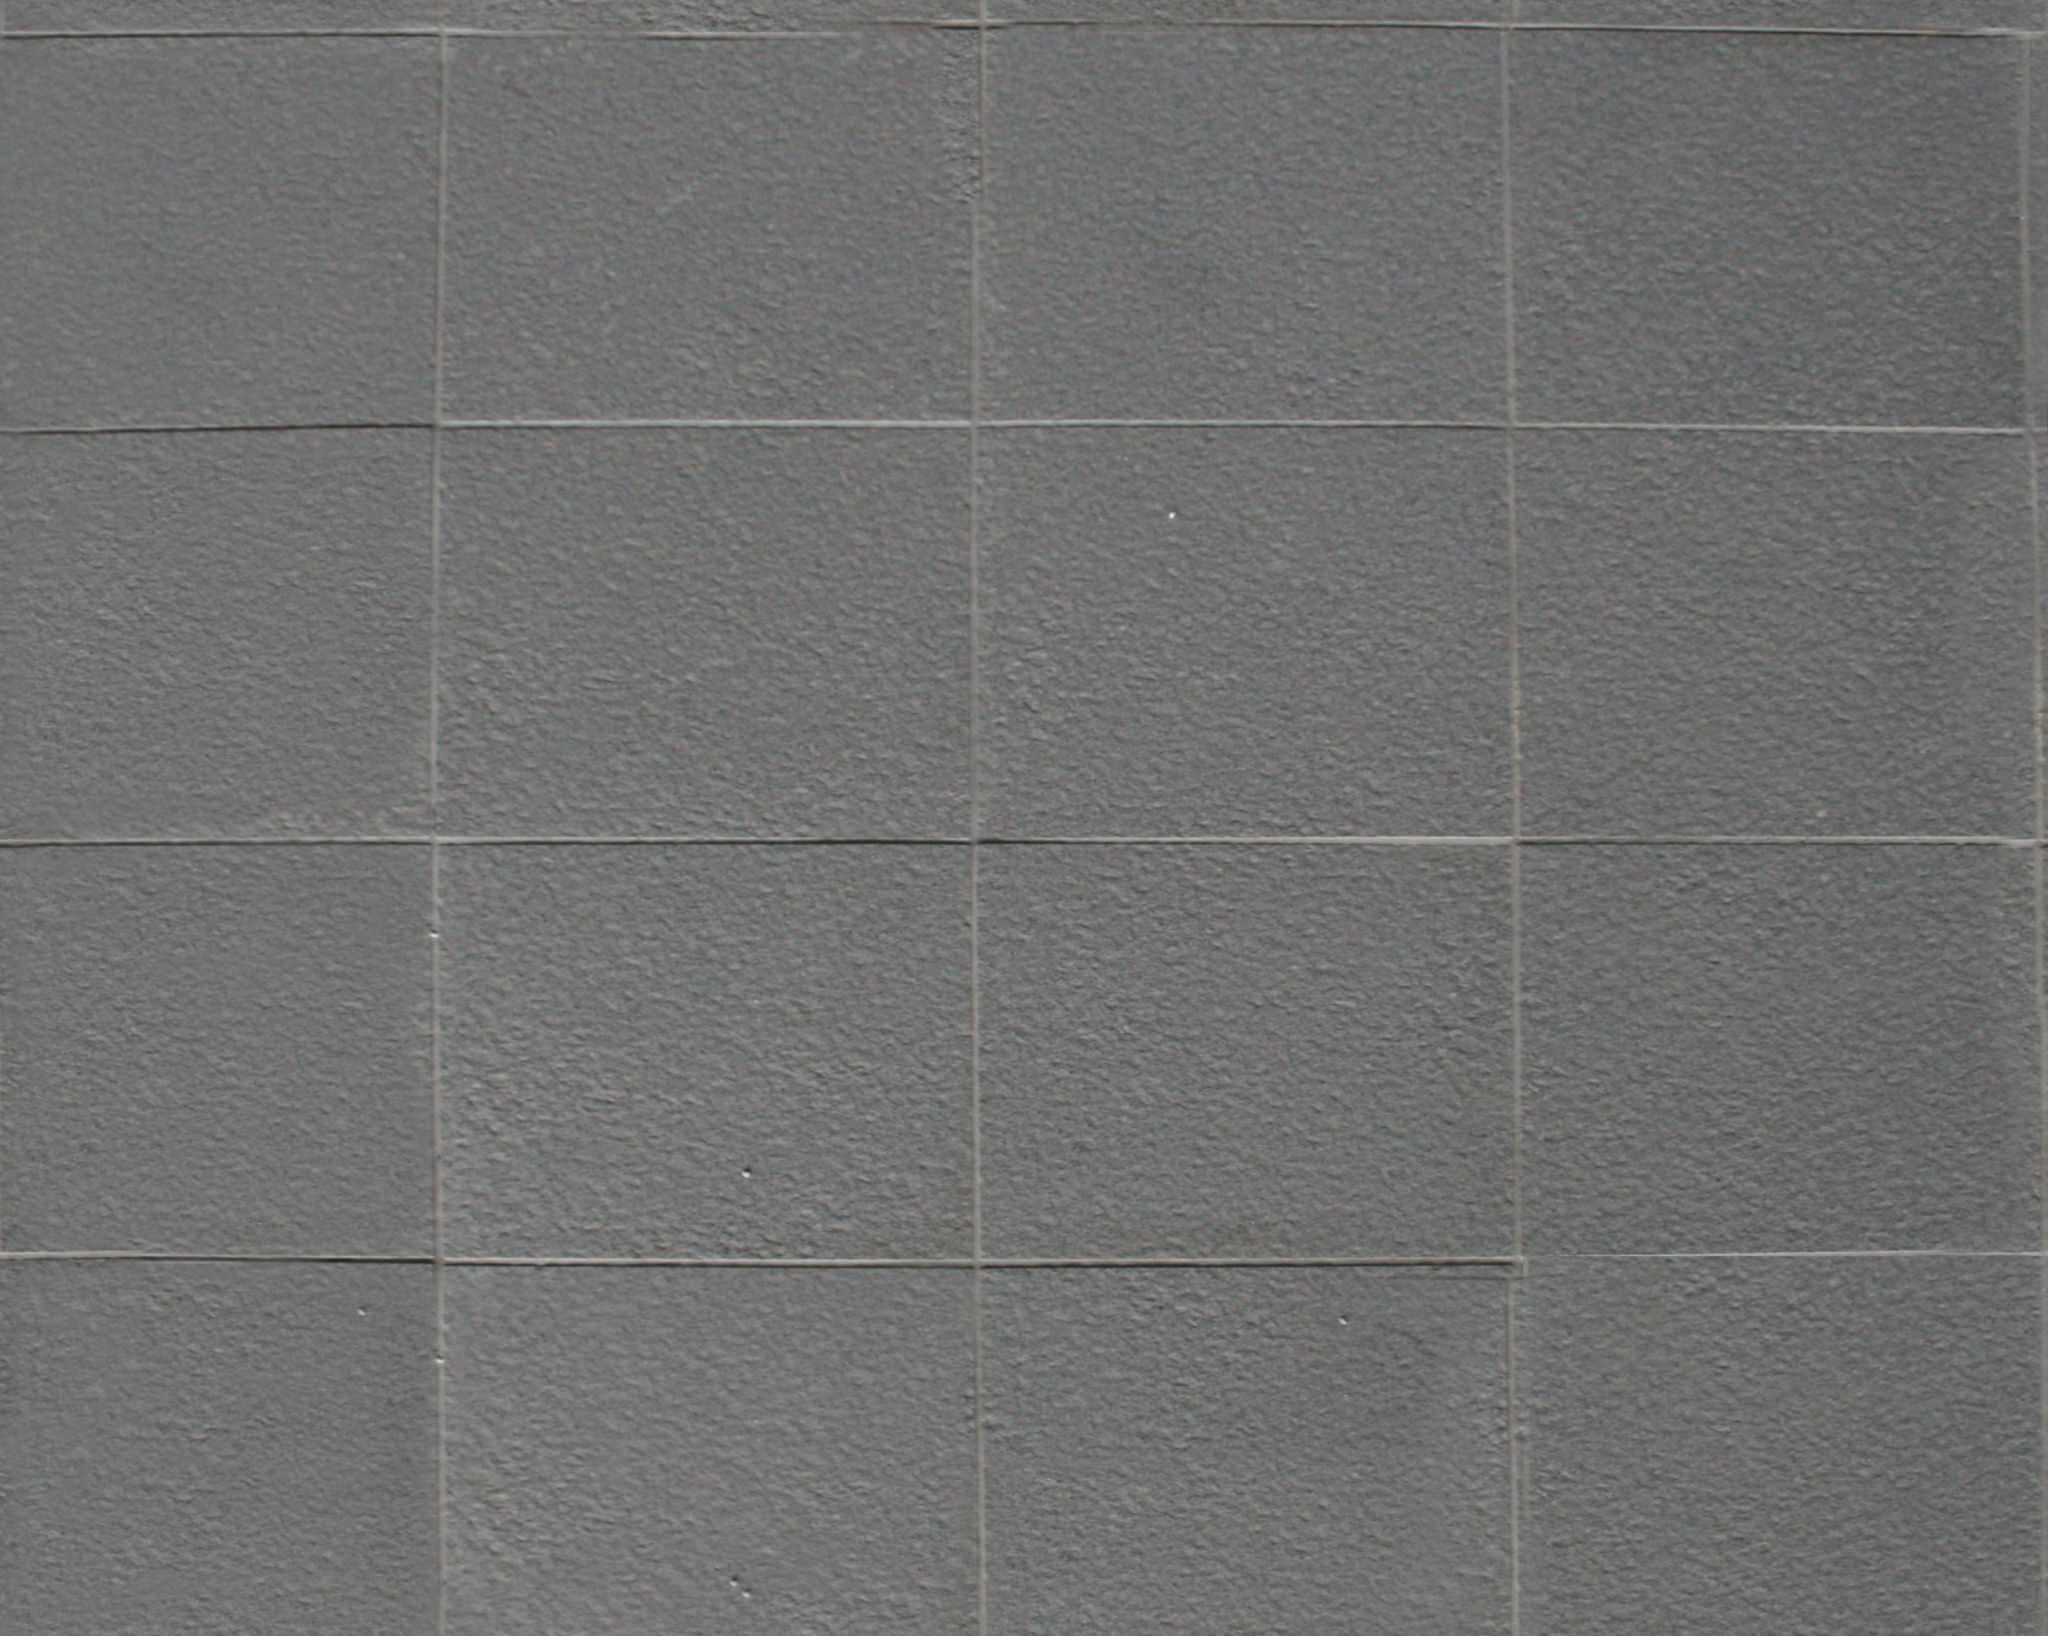 tiles texture tileable Texture normalmap Seamless Grey  Paving with  Tiles